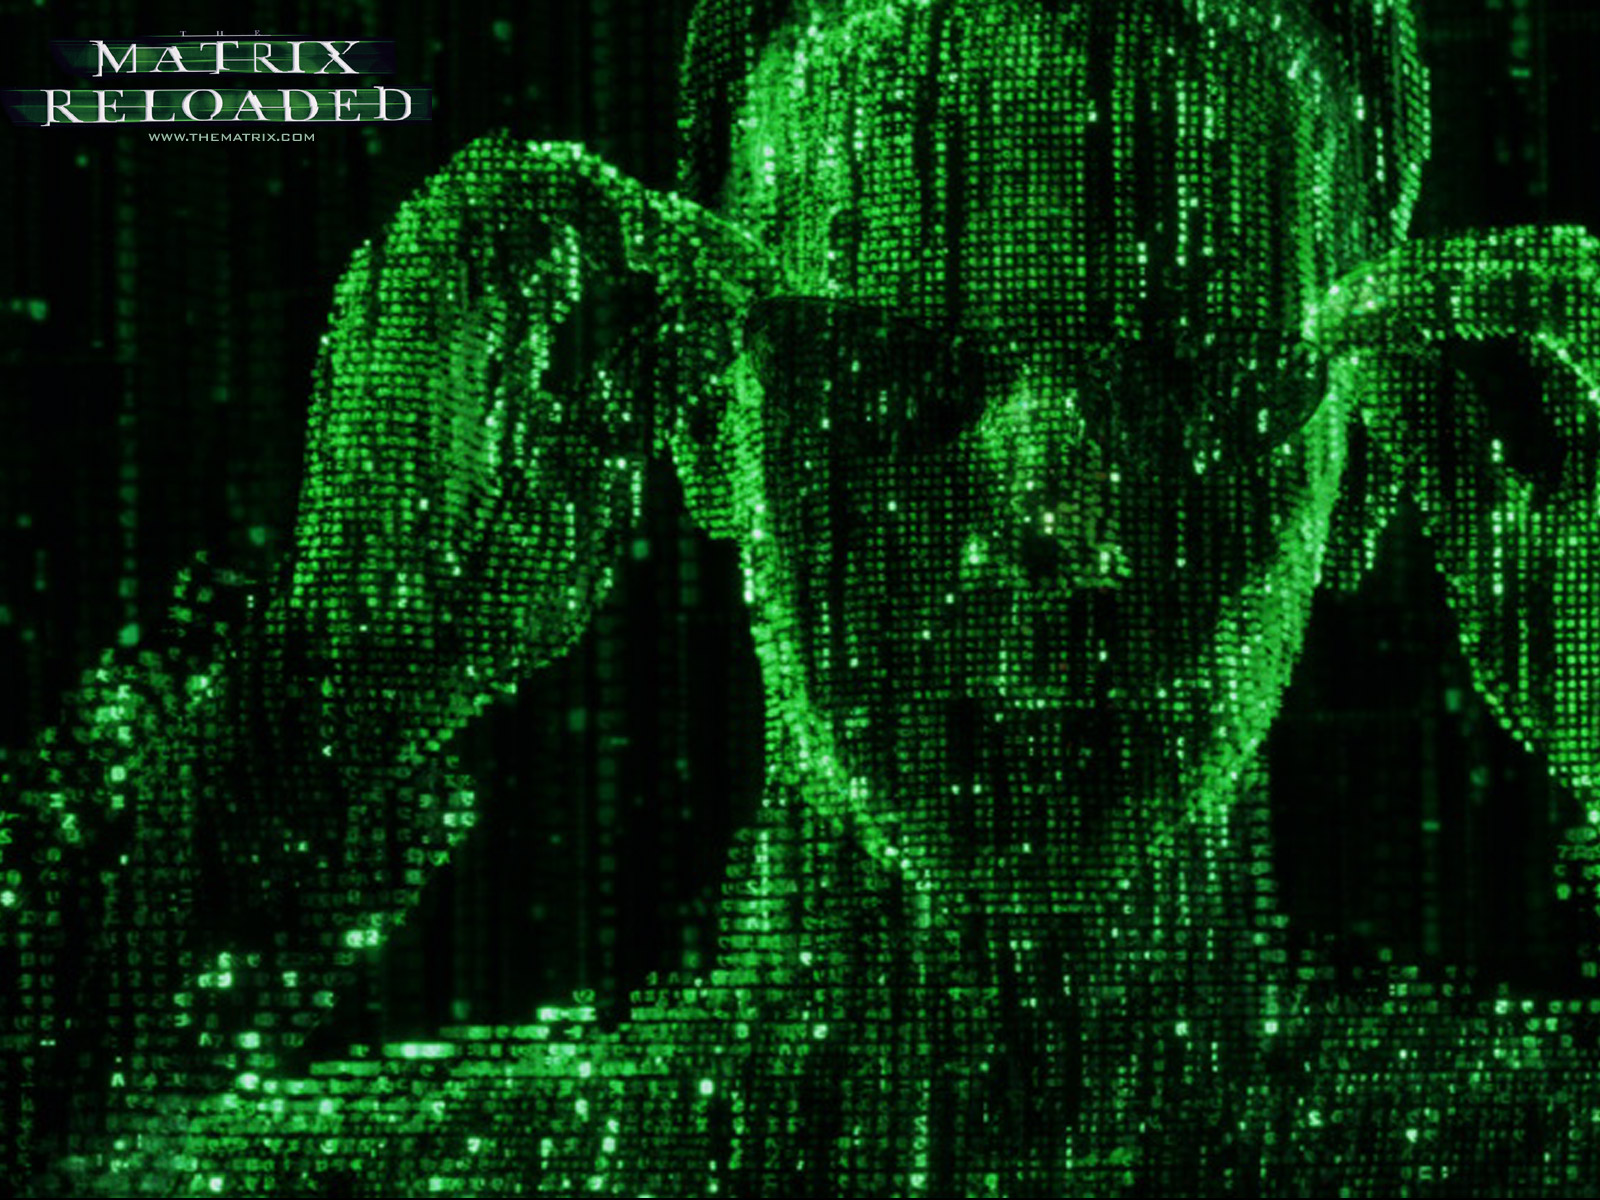 The Matrix 1600x1200